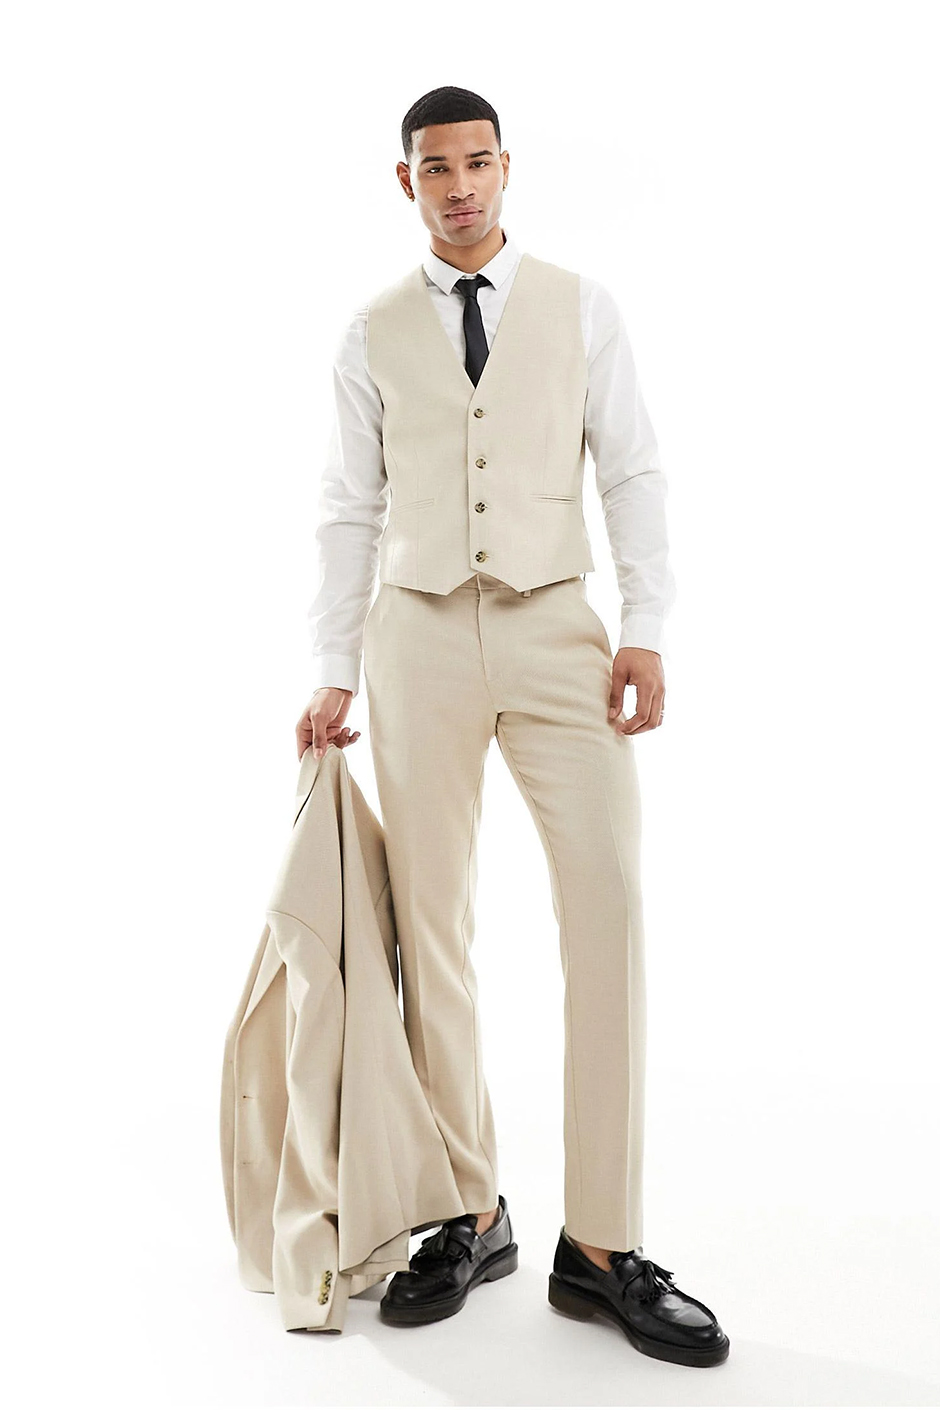 Beige slim fit groomsmen suit from Asos in natural stone shade for weddings 